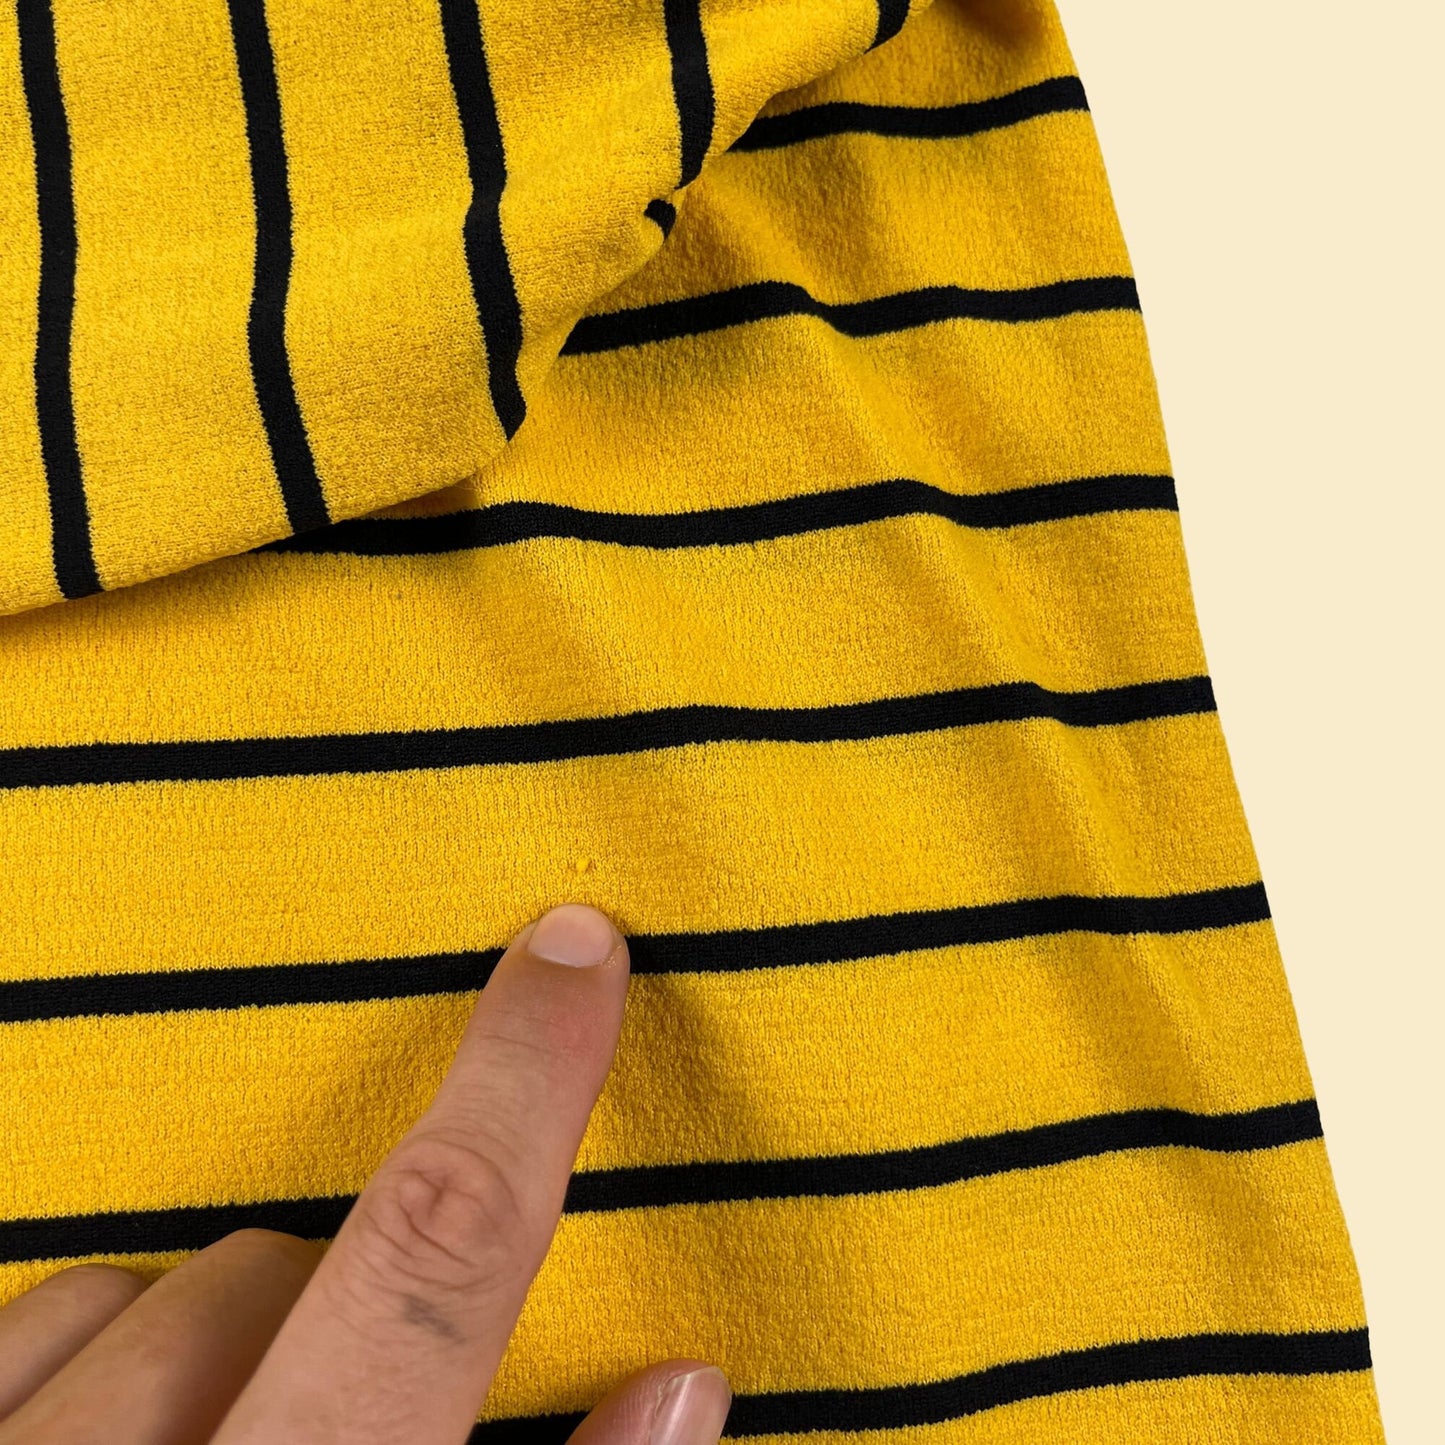 1970s Wheels of Man black & yellow 'Bumblebee' men's shirt, vintage 70s men's casual long sleeve striped polo